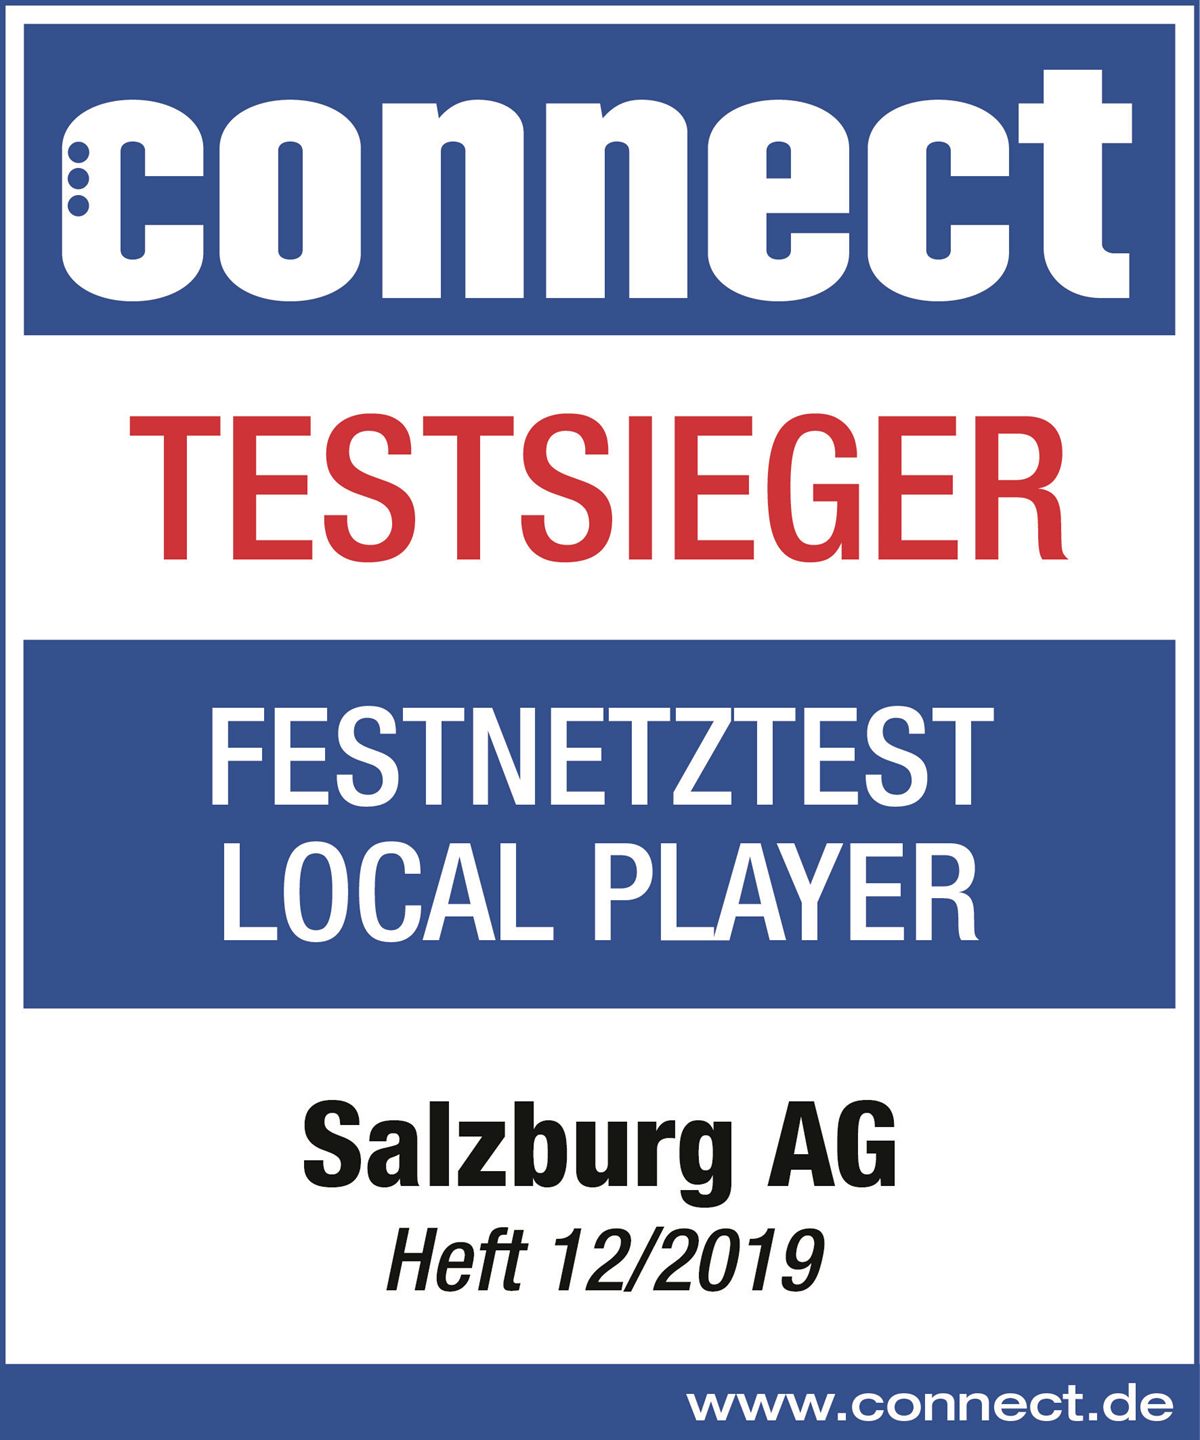 Connect Testsieger: Salzburg AG hat bestes Internet im Bundesland